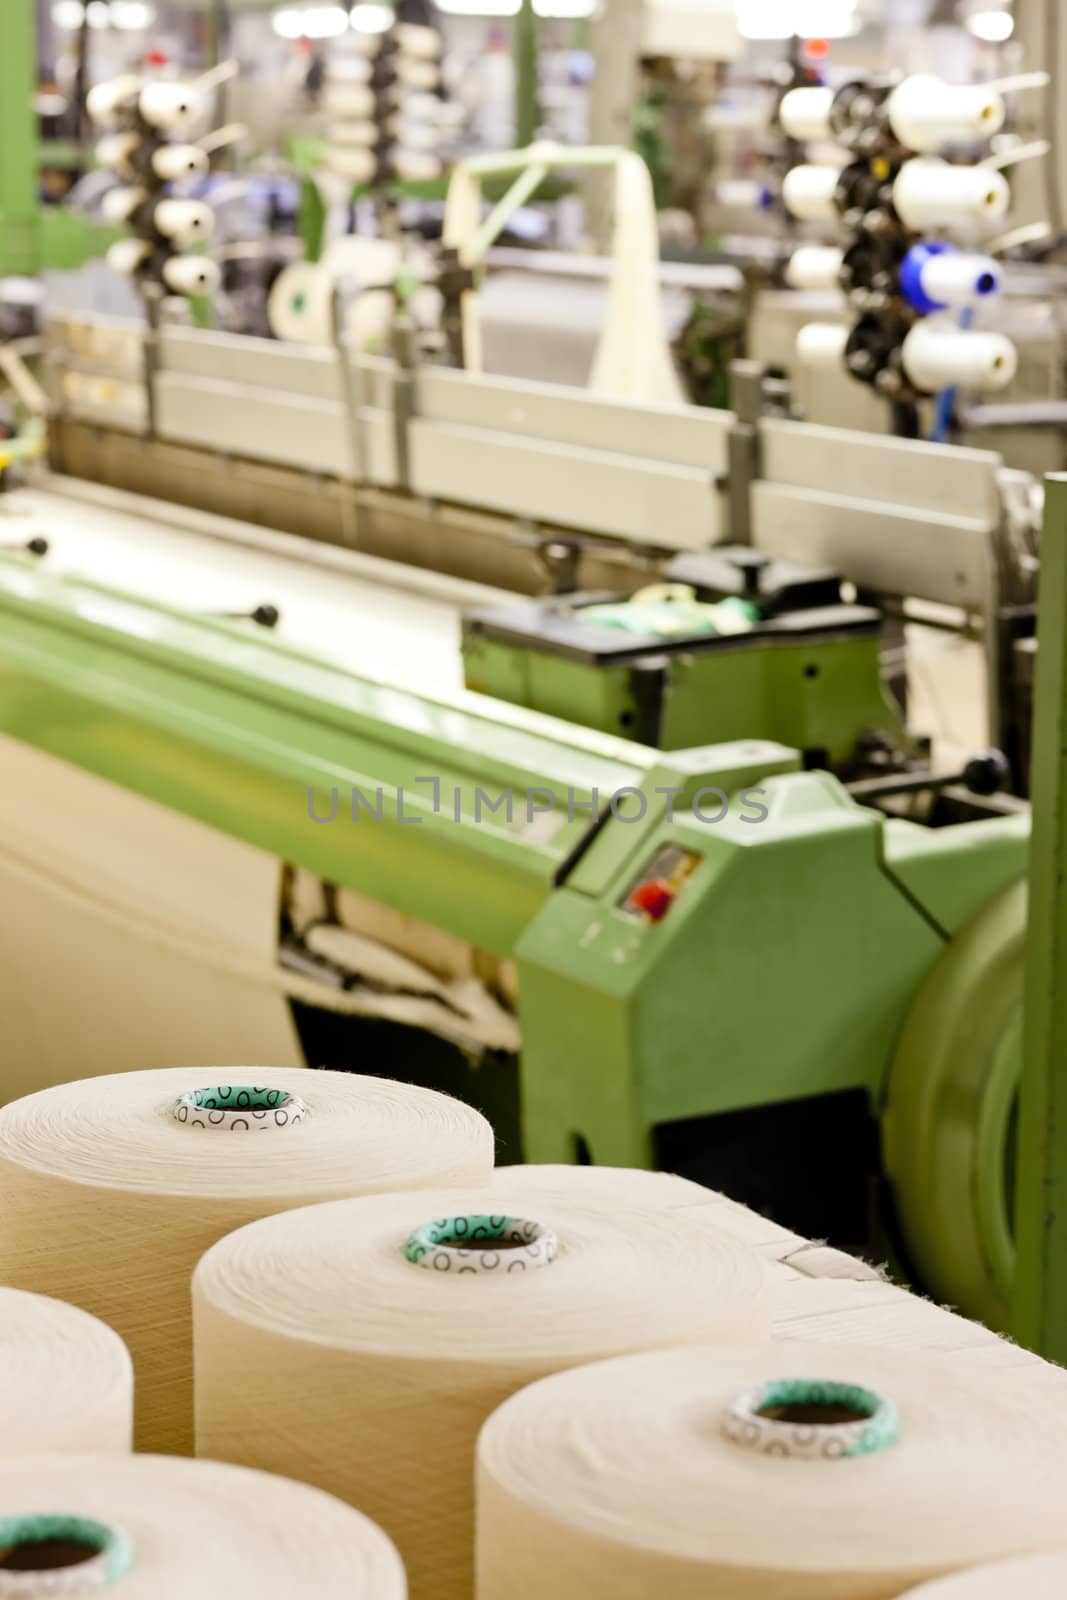 textile machine by phbcz